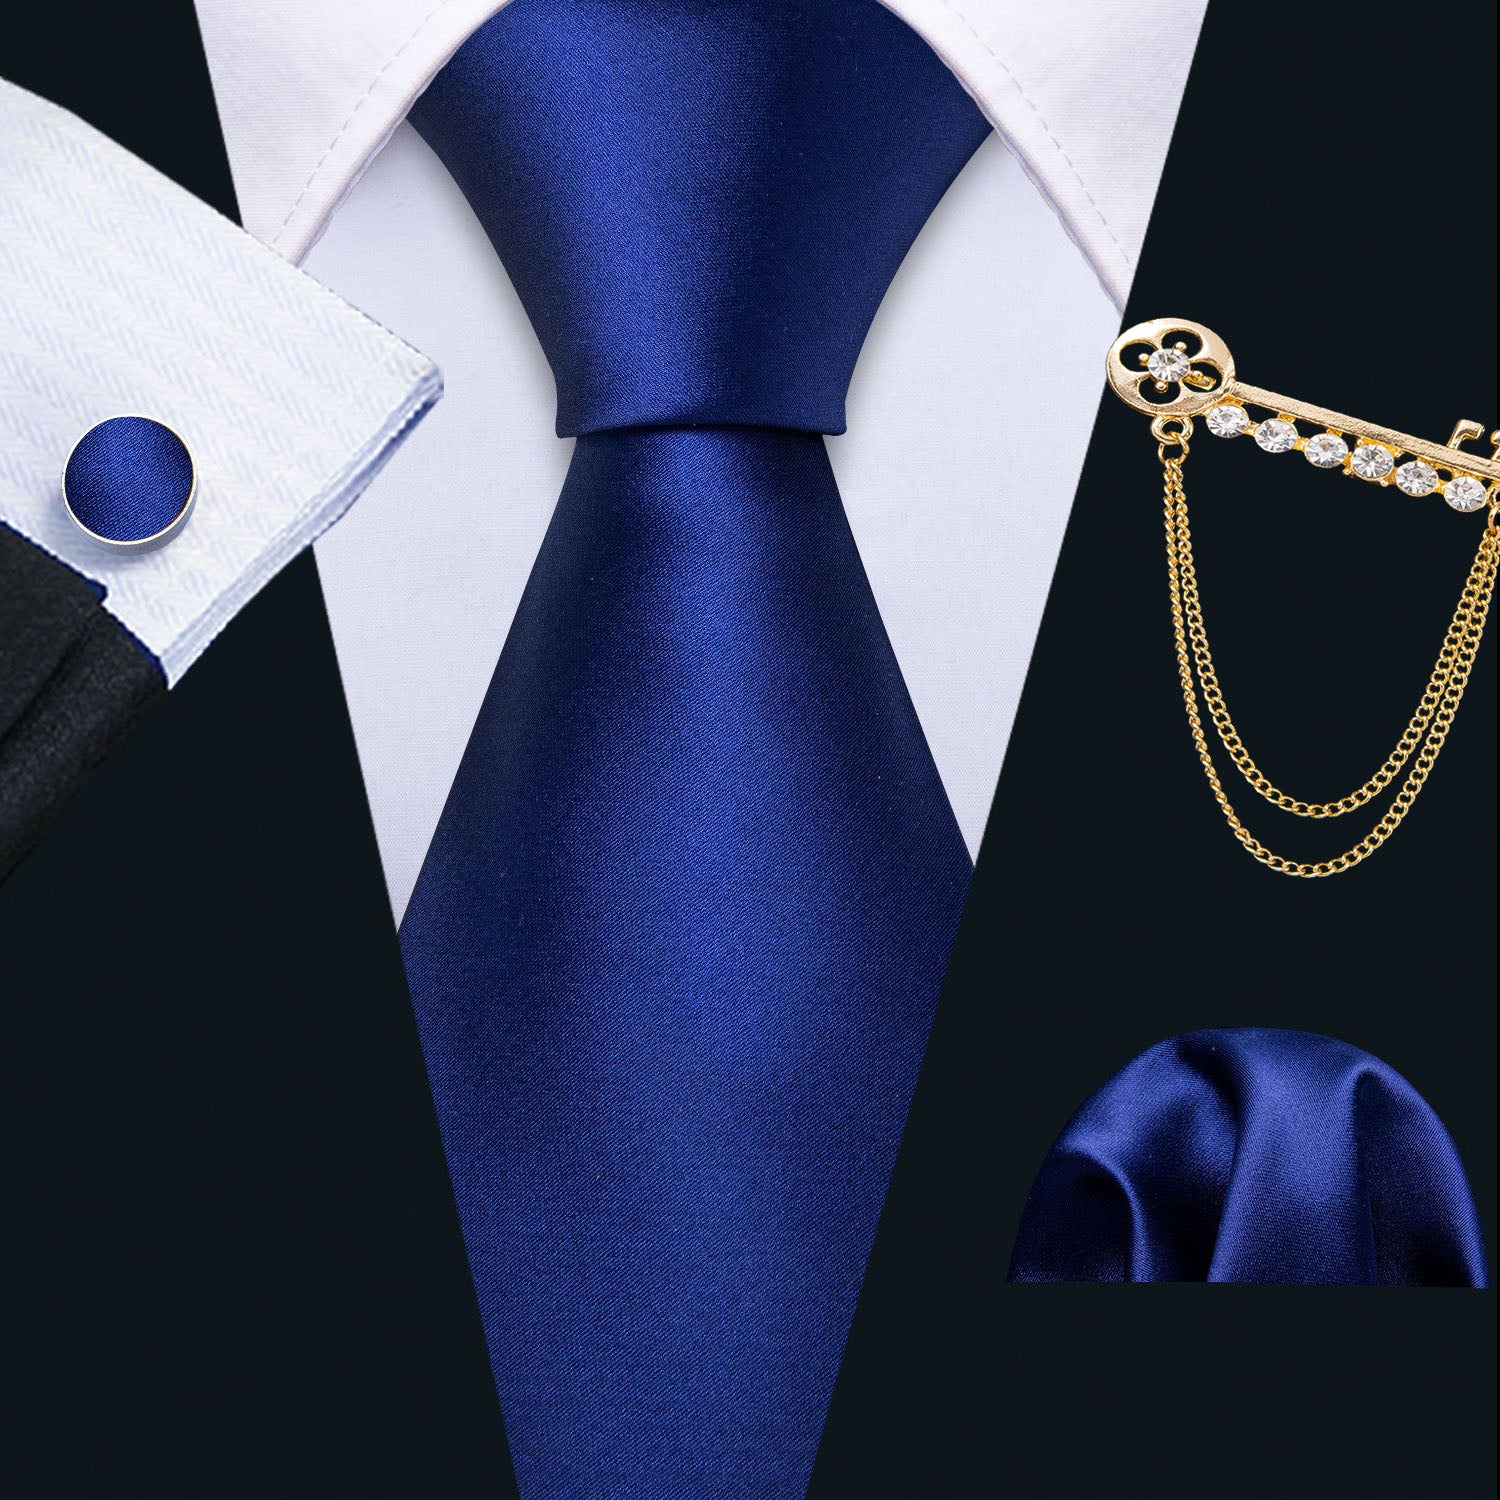 Blue Tie Sapphire Solid Men's Silk Tie Set with Lapel Pin Brooch